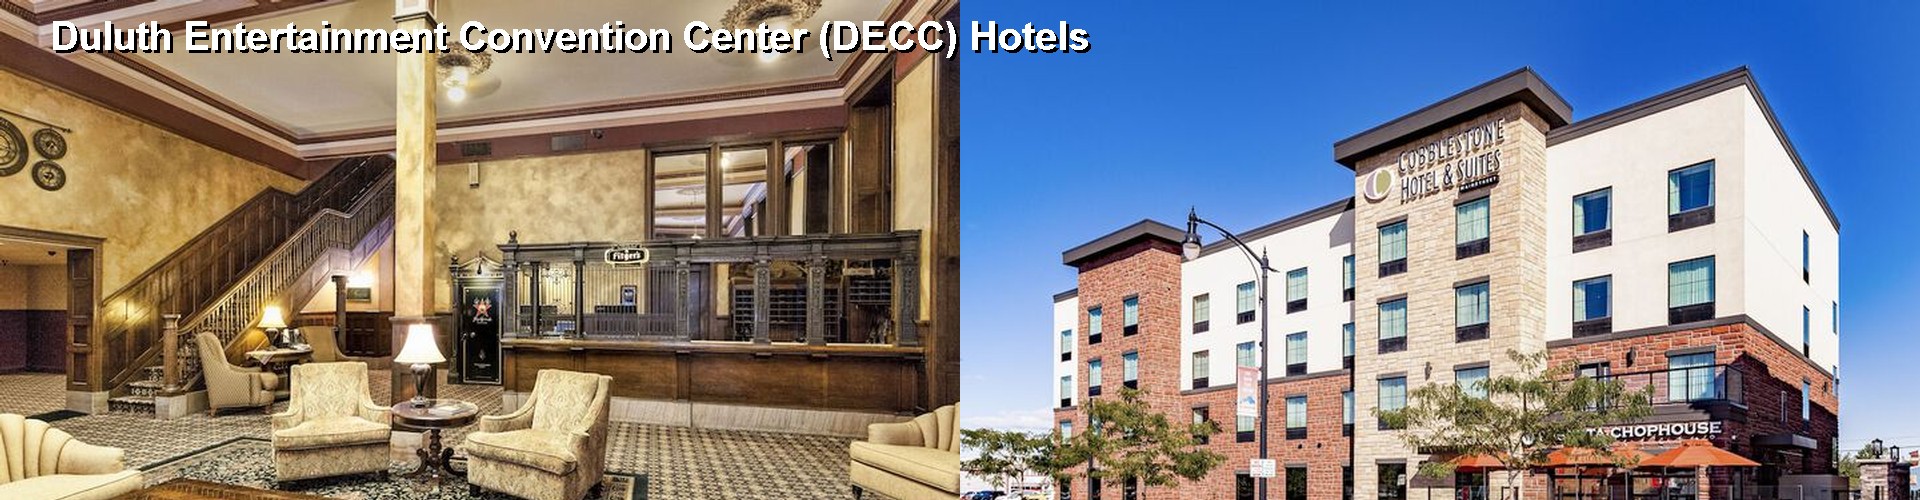 5 Best Hotels near Duluth Entertainment Convention Center (DECC)